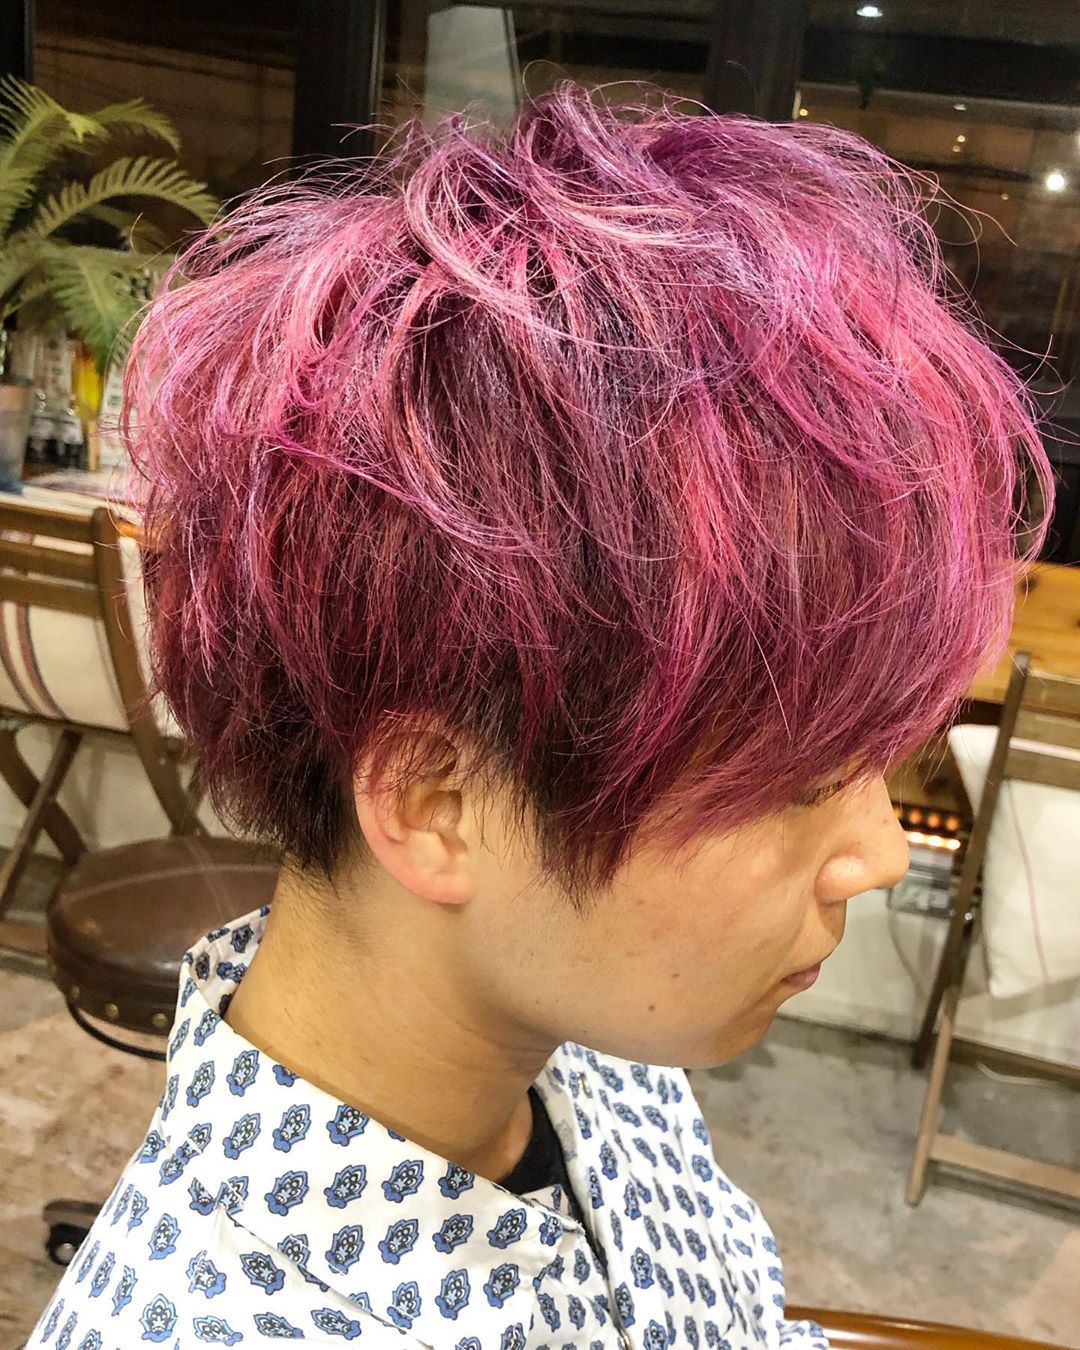 Hair Designer Ikedai 深いバイオレットのベースにピンクのメッシュ